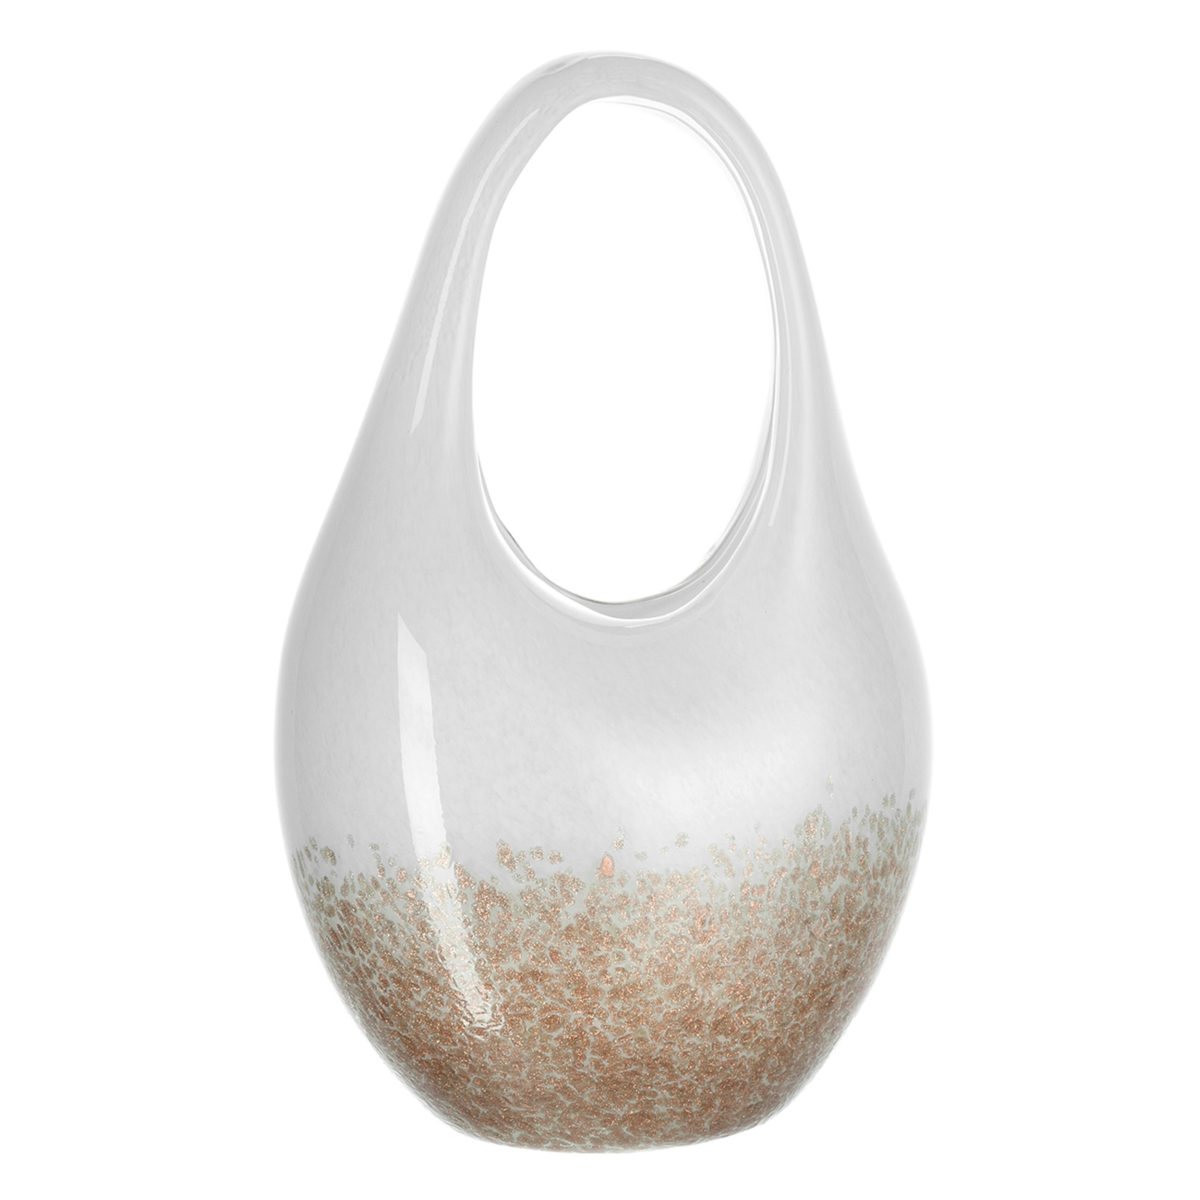 LEO03152201 1200x1200 - Vază decorativă GB/Glass bag white/bro (L031522)